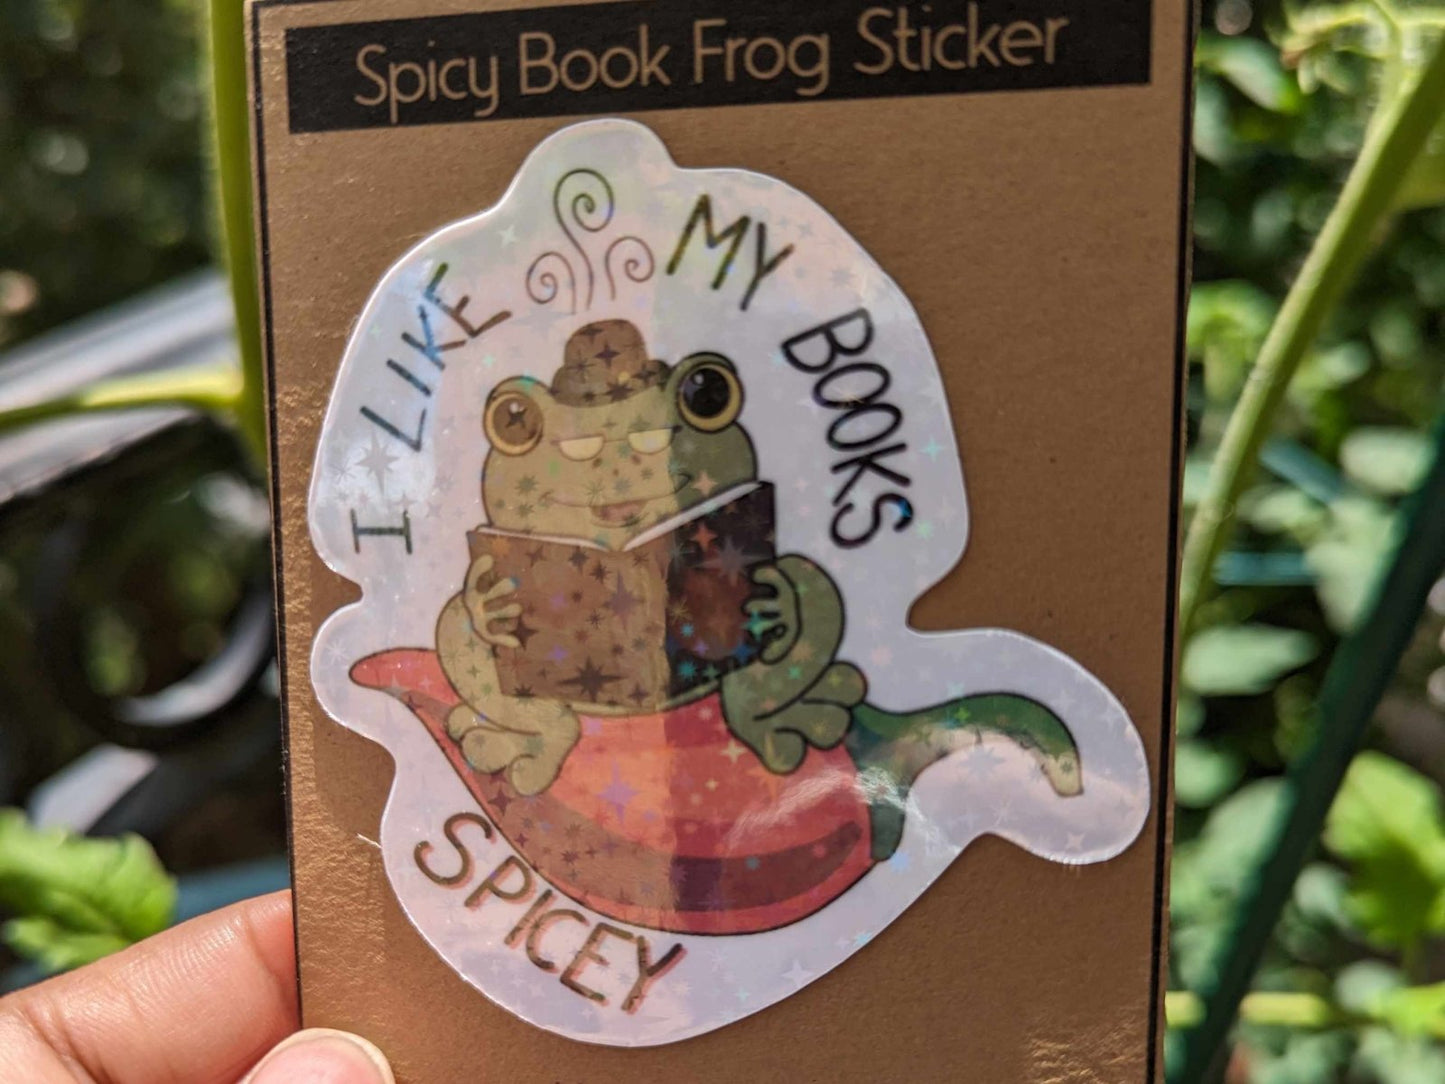 Spicy Book Sticker - Stickers - UpperRoomPrints